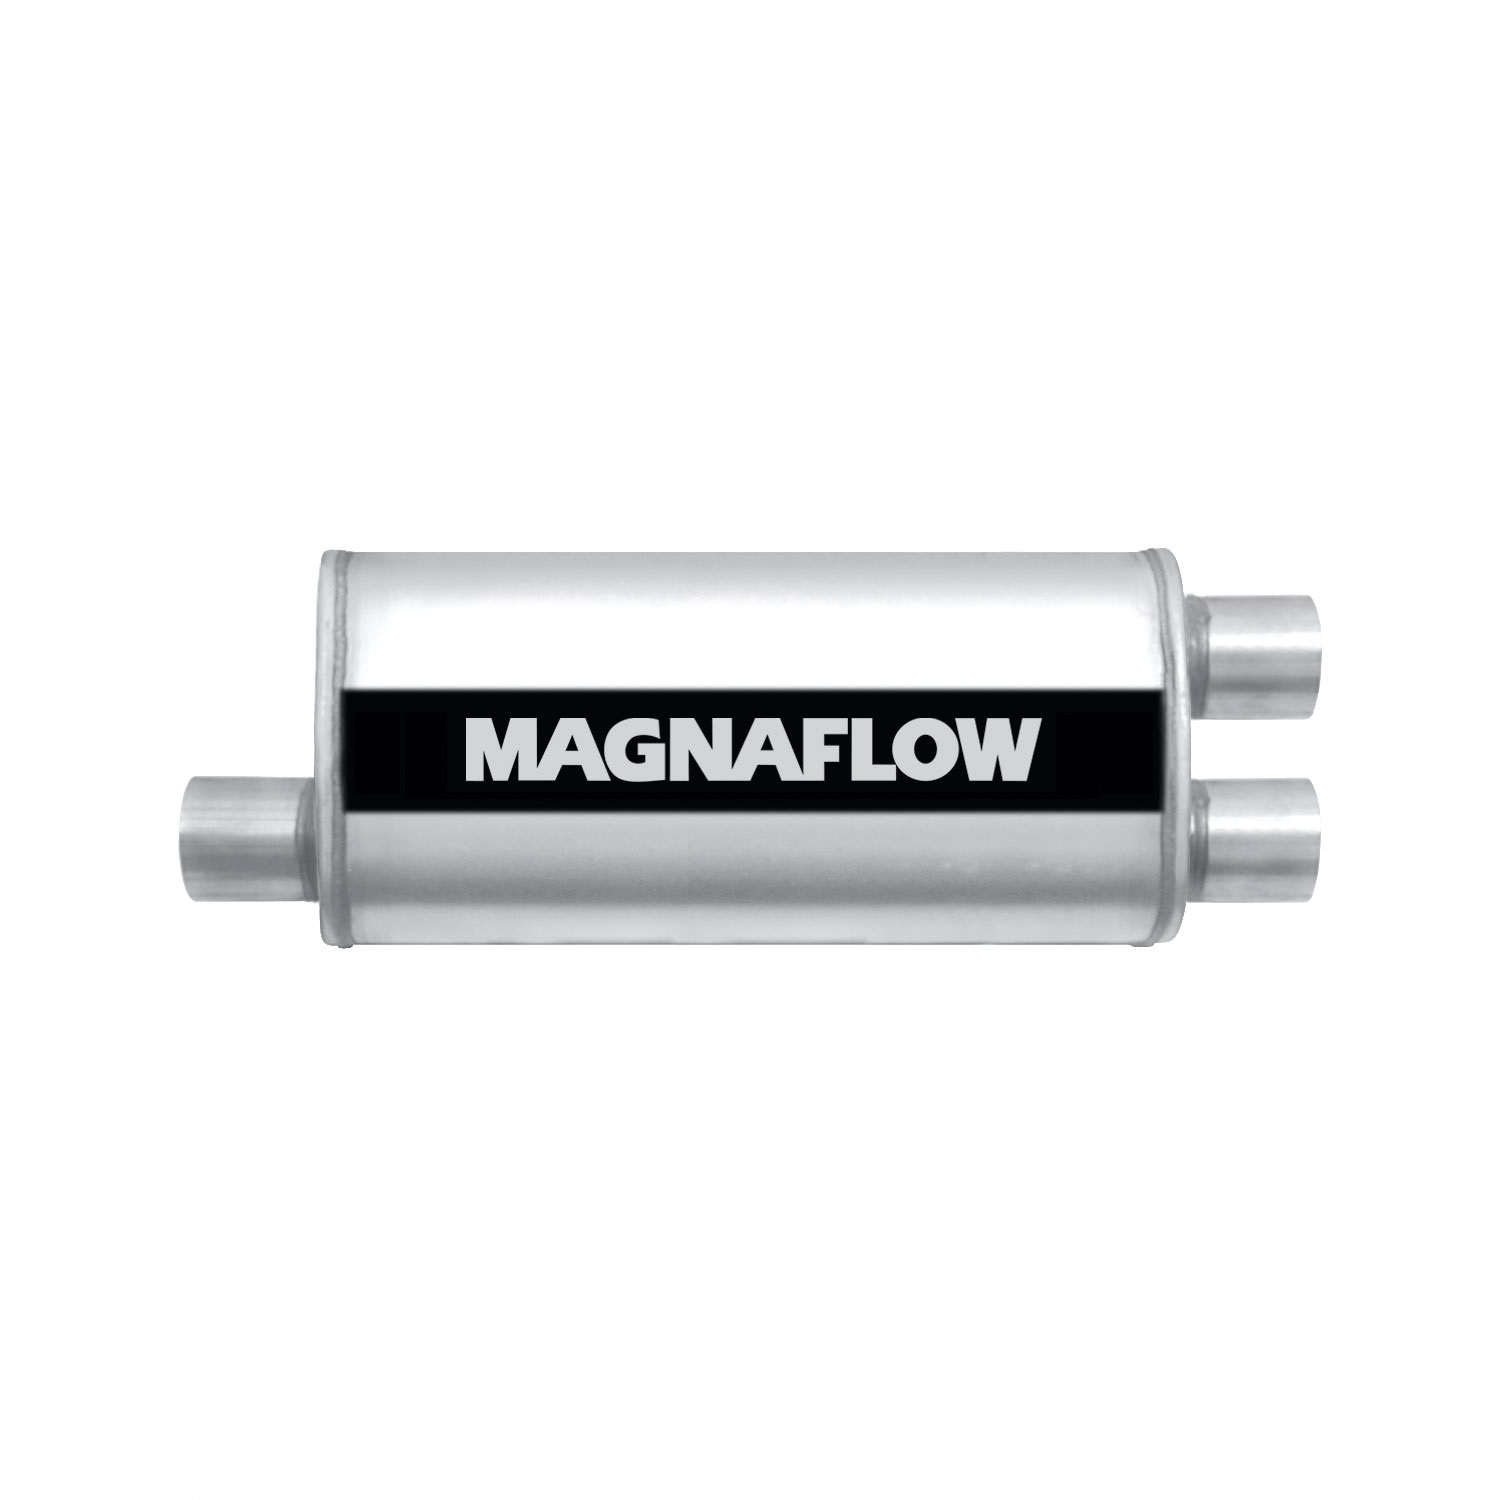 Magnaflow Performance Exhaust Magnaflow Performance Exhaust 12266 Stainless Steel Muffler